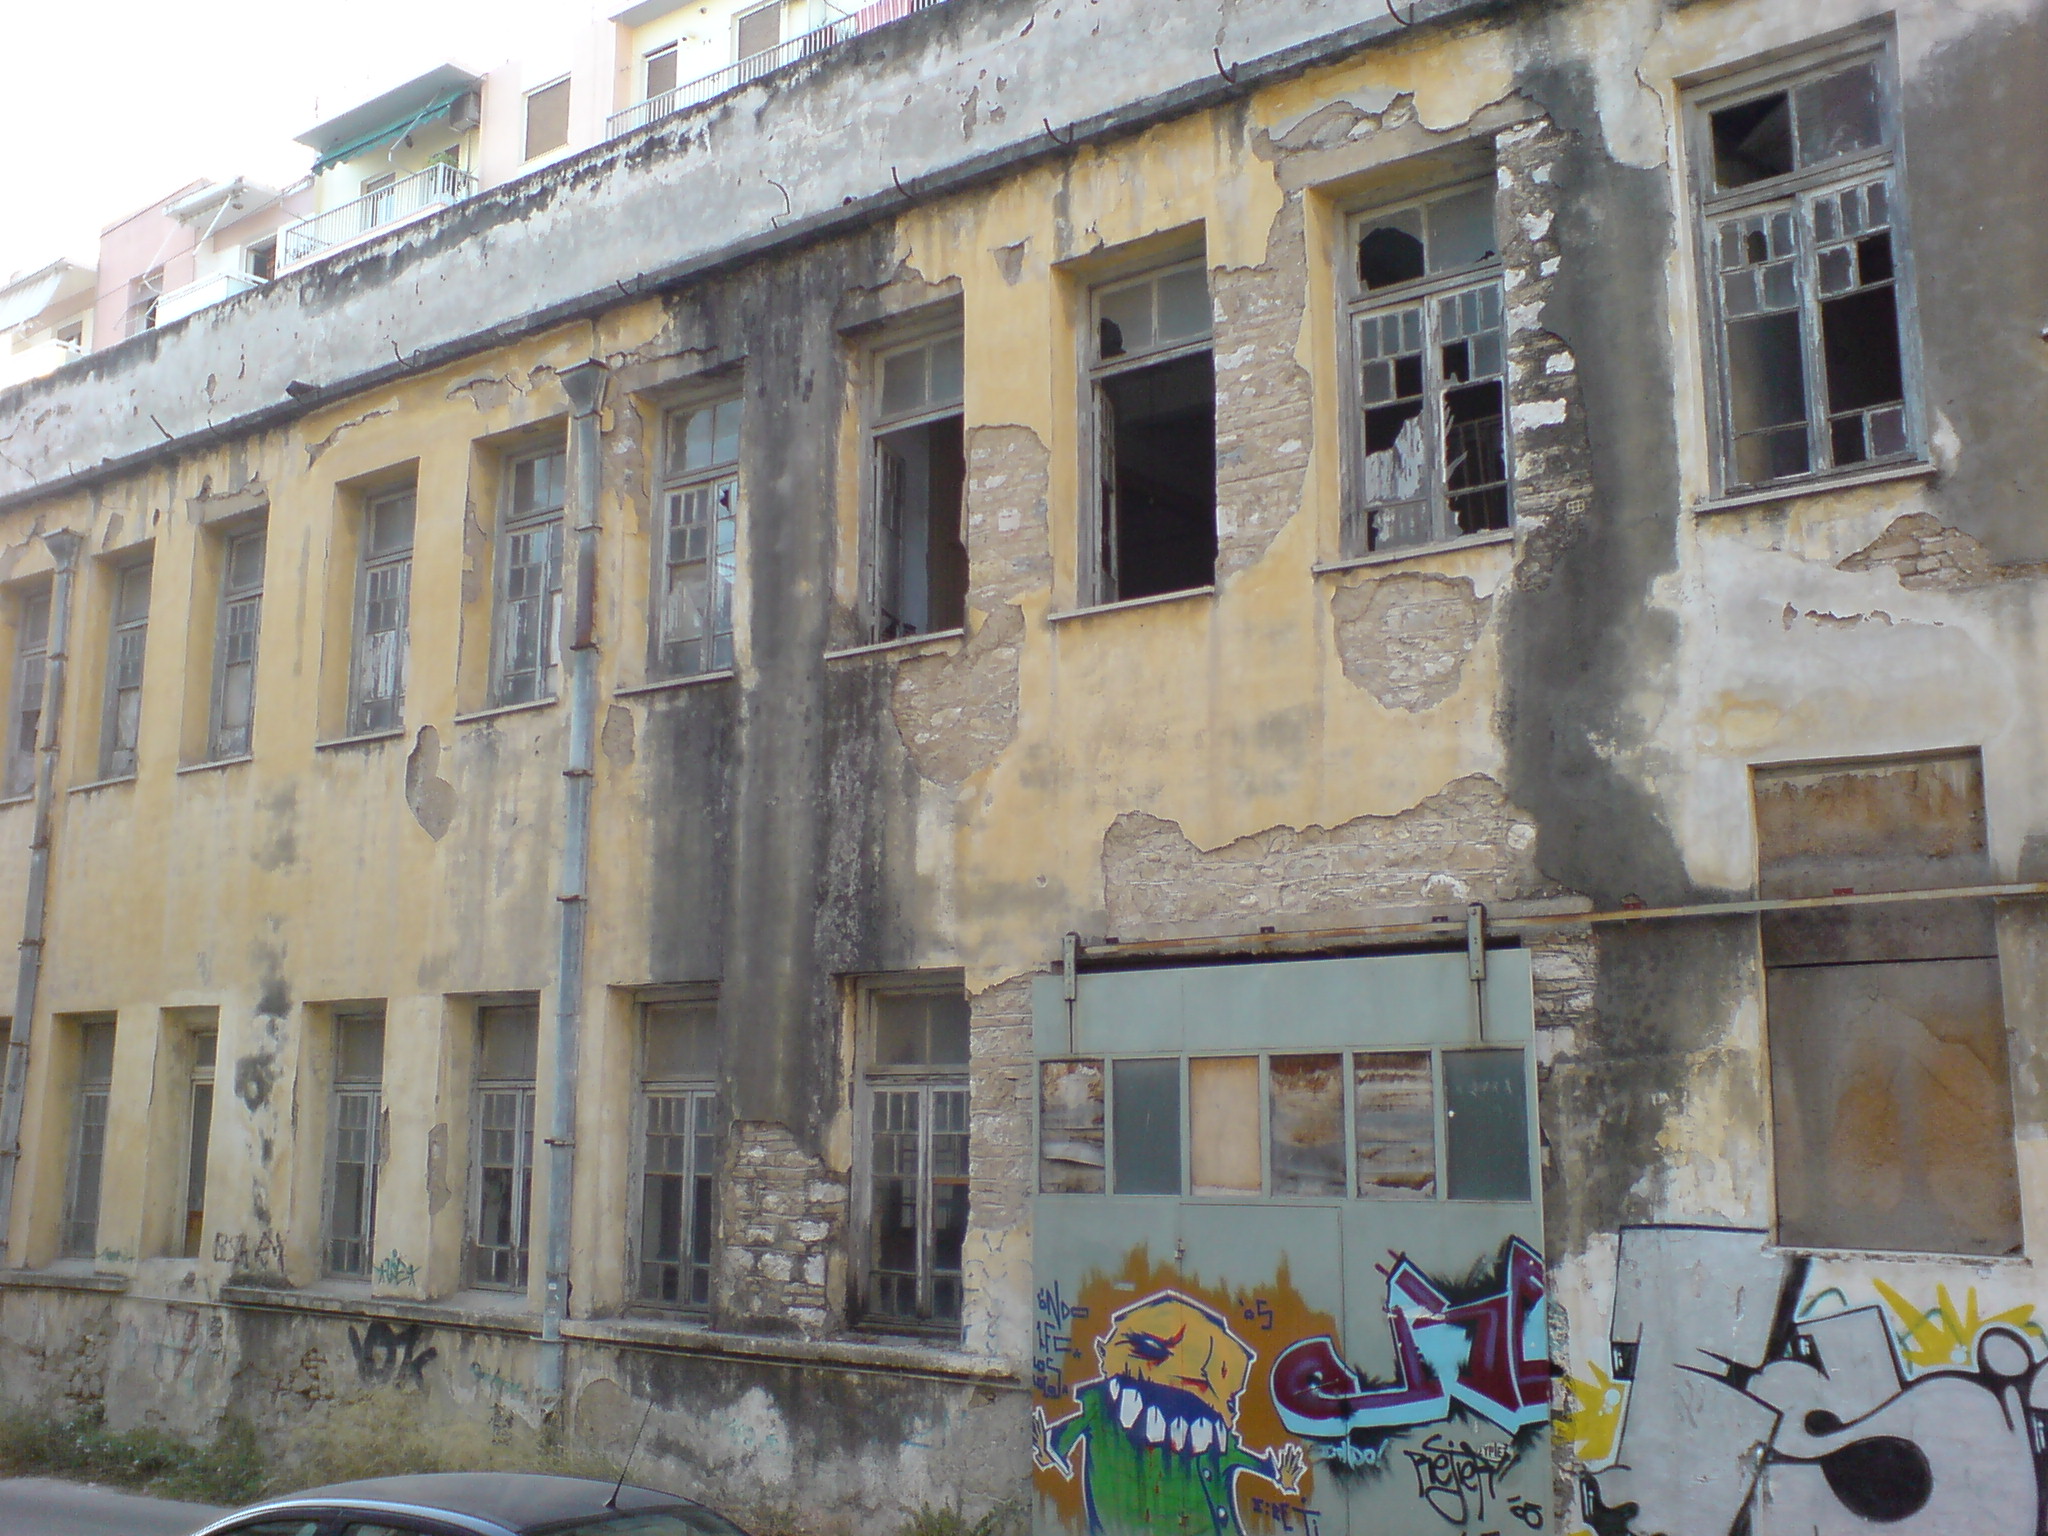 File:An old building in Patras, Greece.JPG - Wikipedia